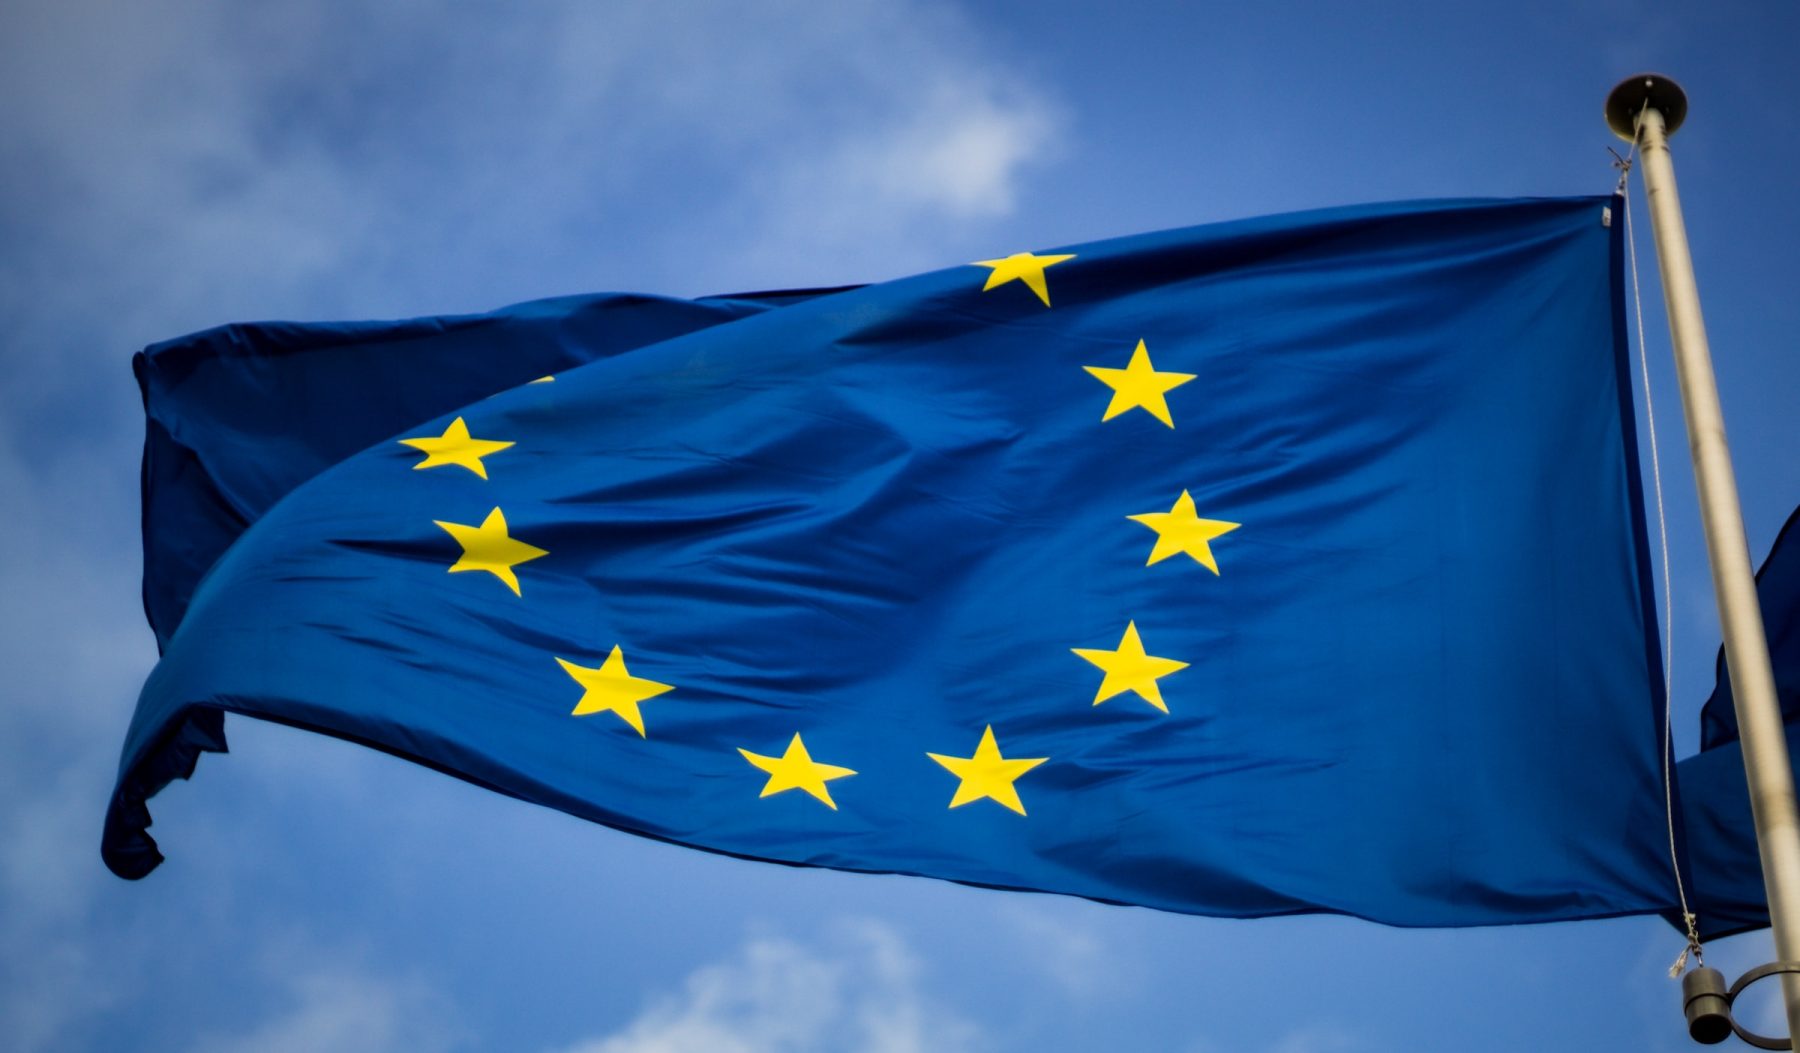 EU flag by Christian Lue on Unsplash